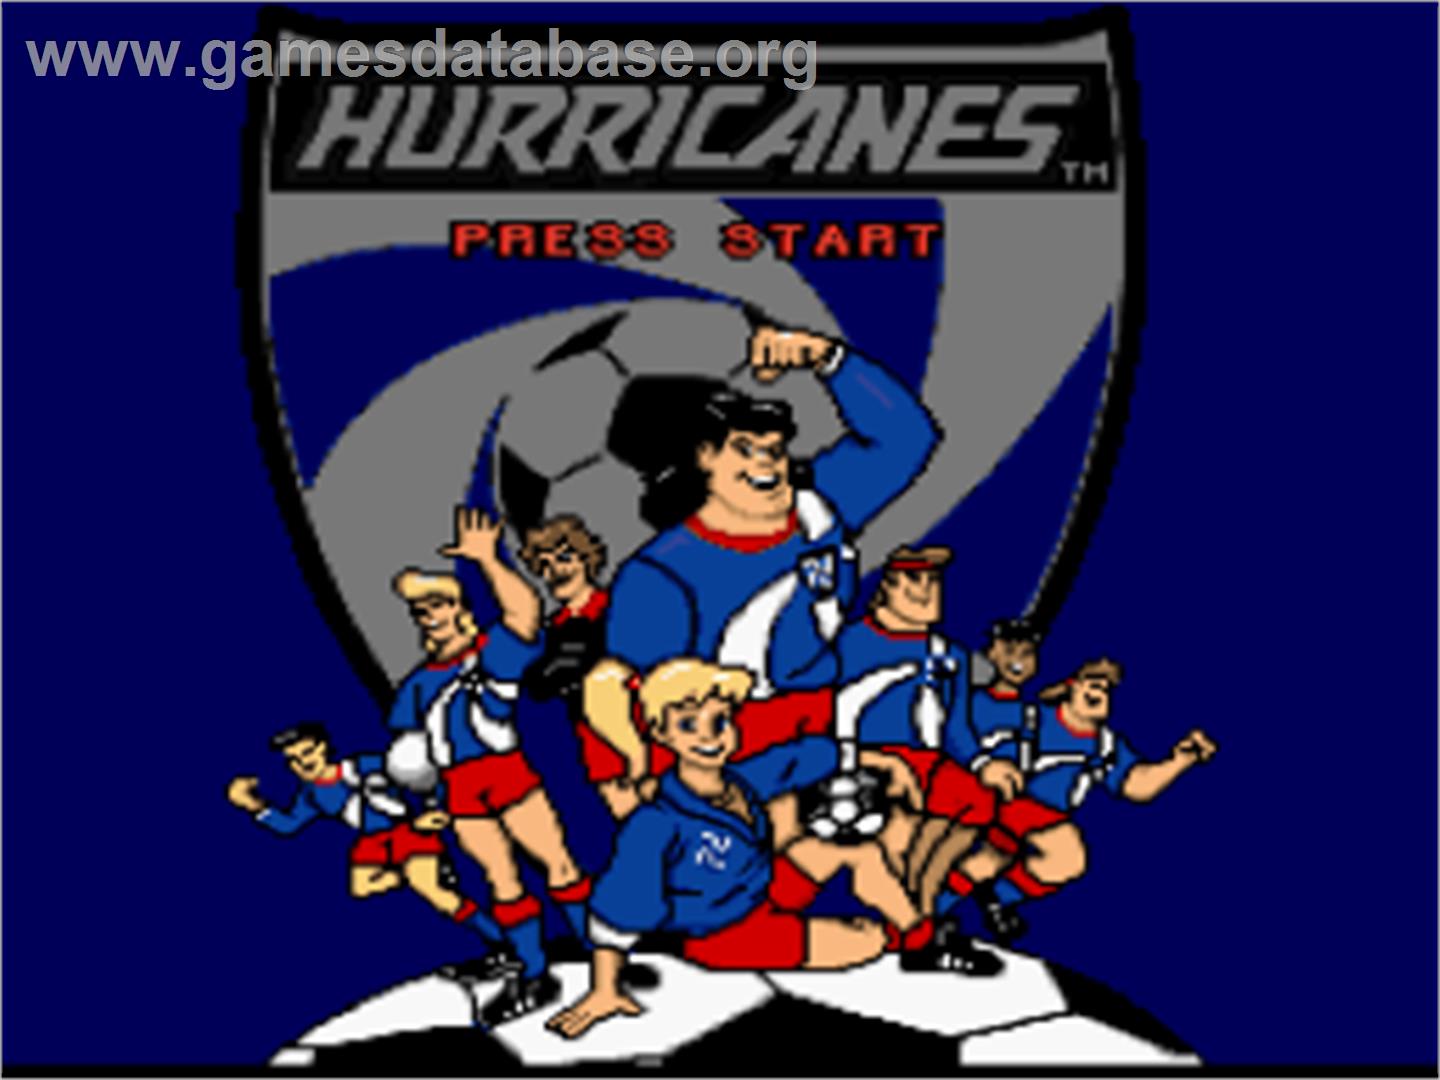 The Hurricanes - Nintendo SNES - Artwork - Title Screen